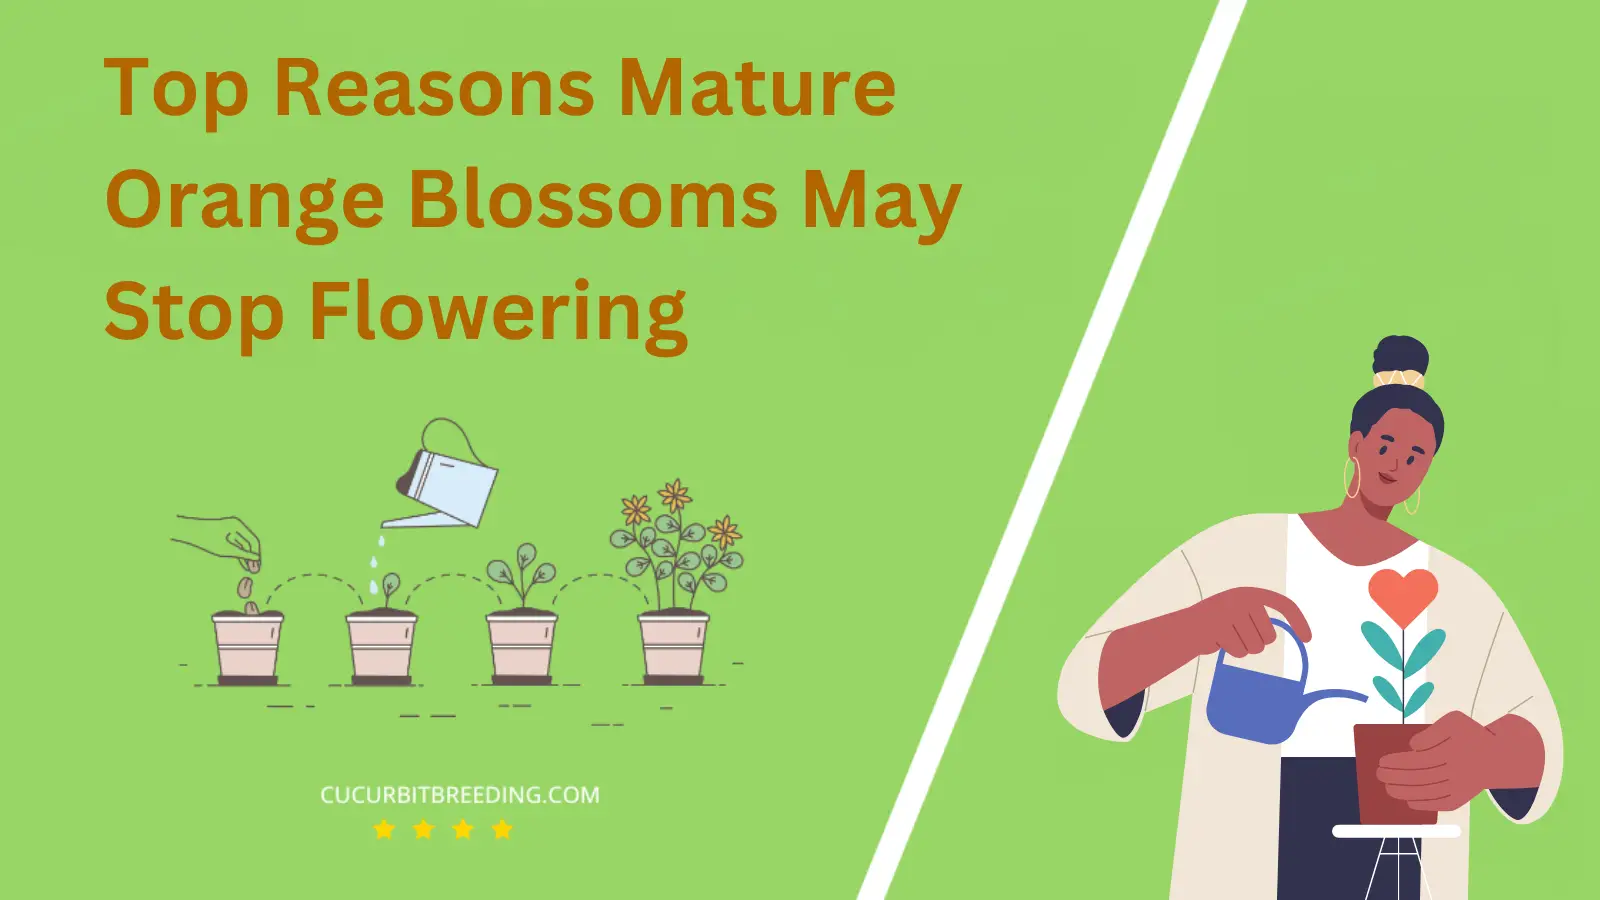 Top Reasons Mature Orange Blossoms May Stop Flowering